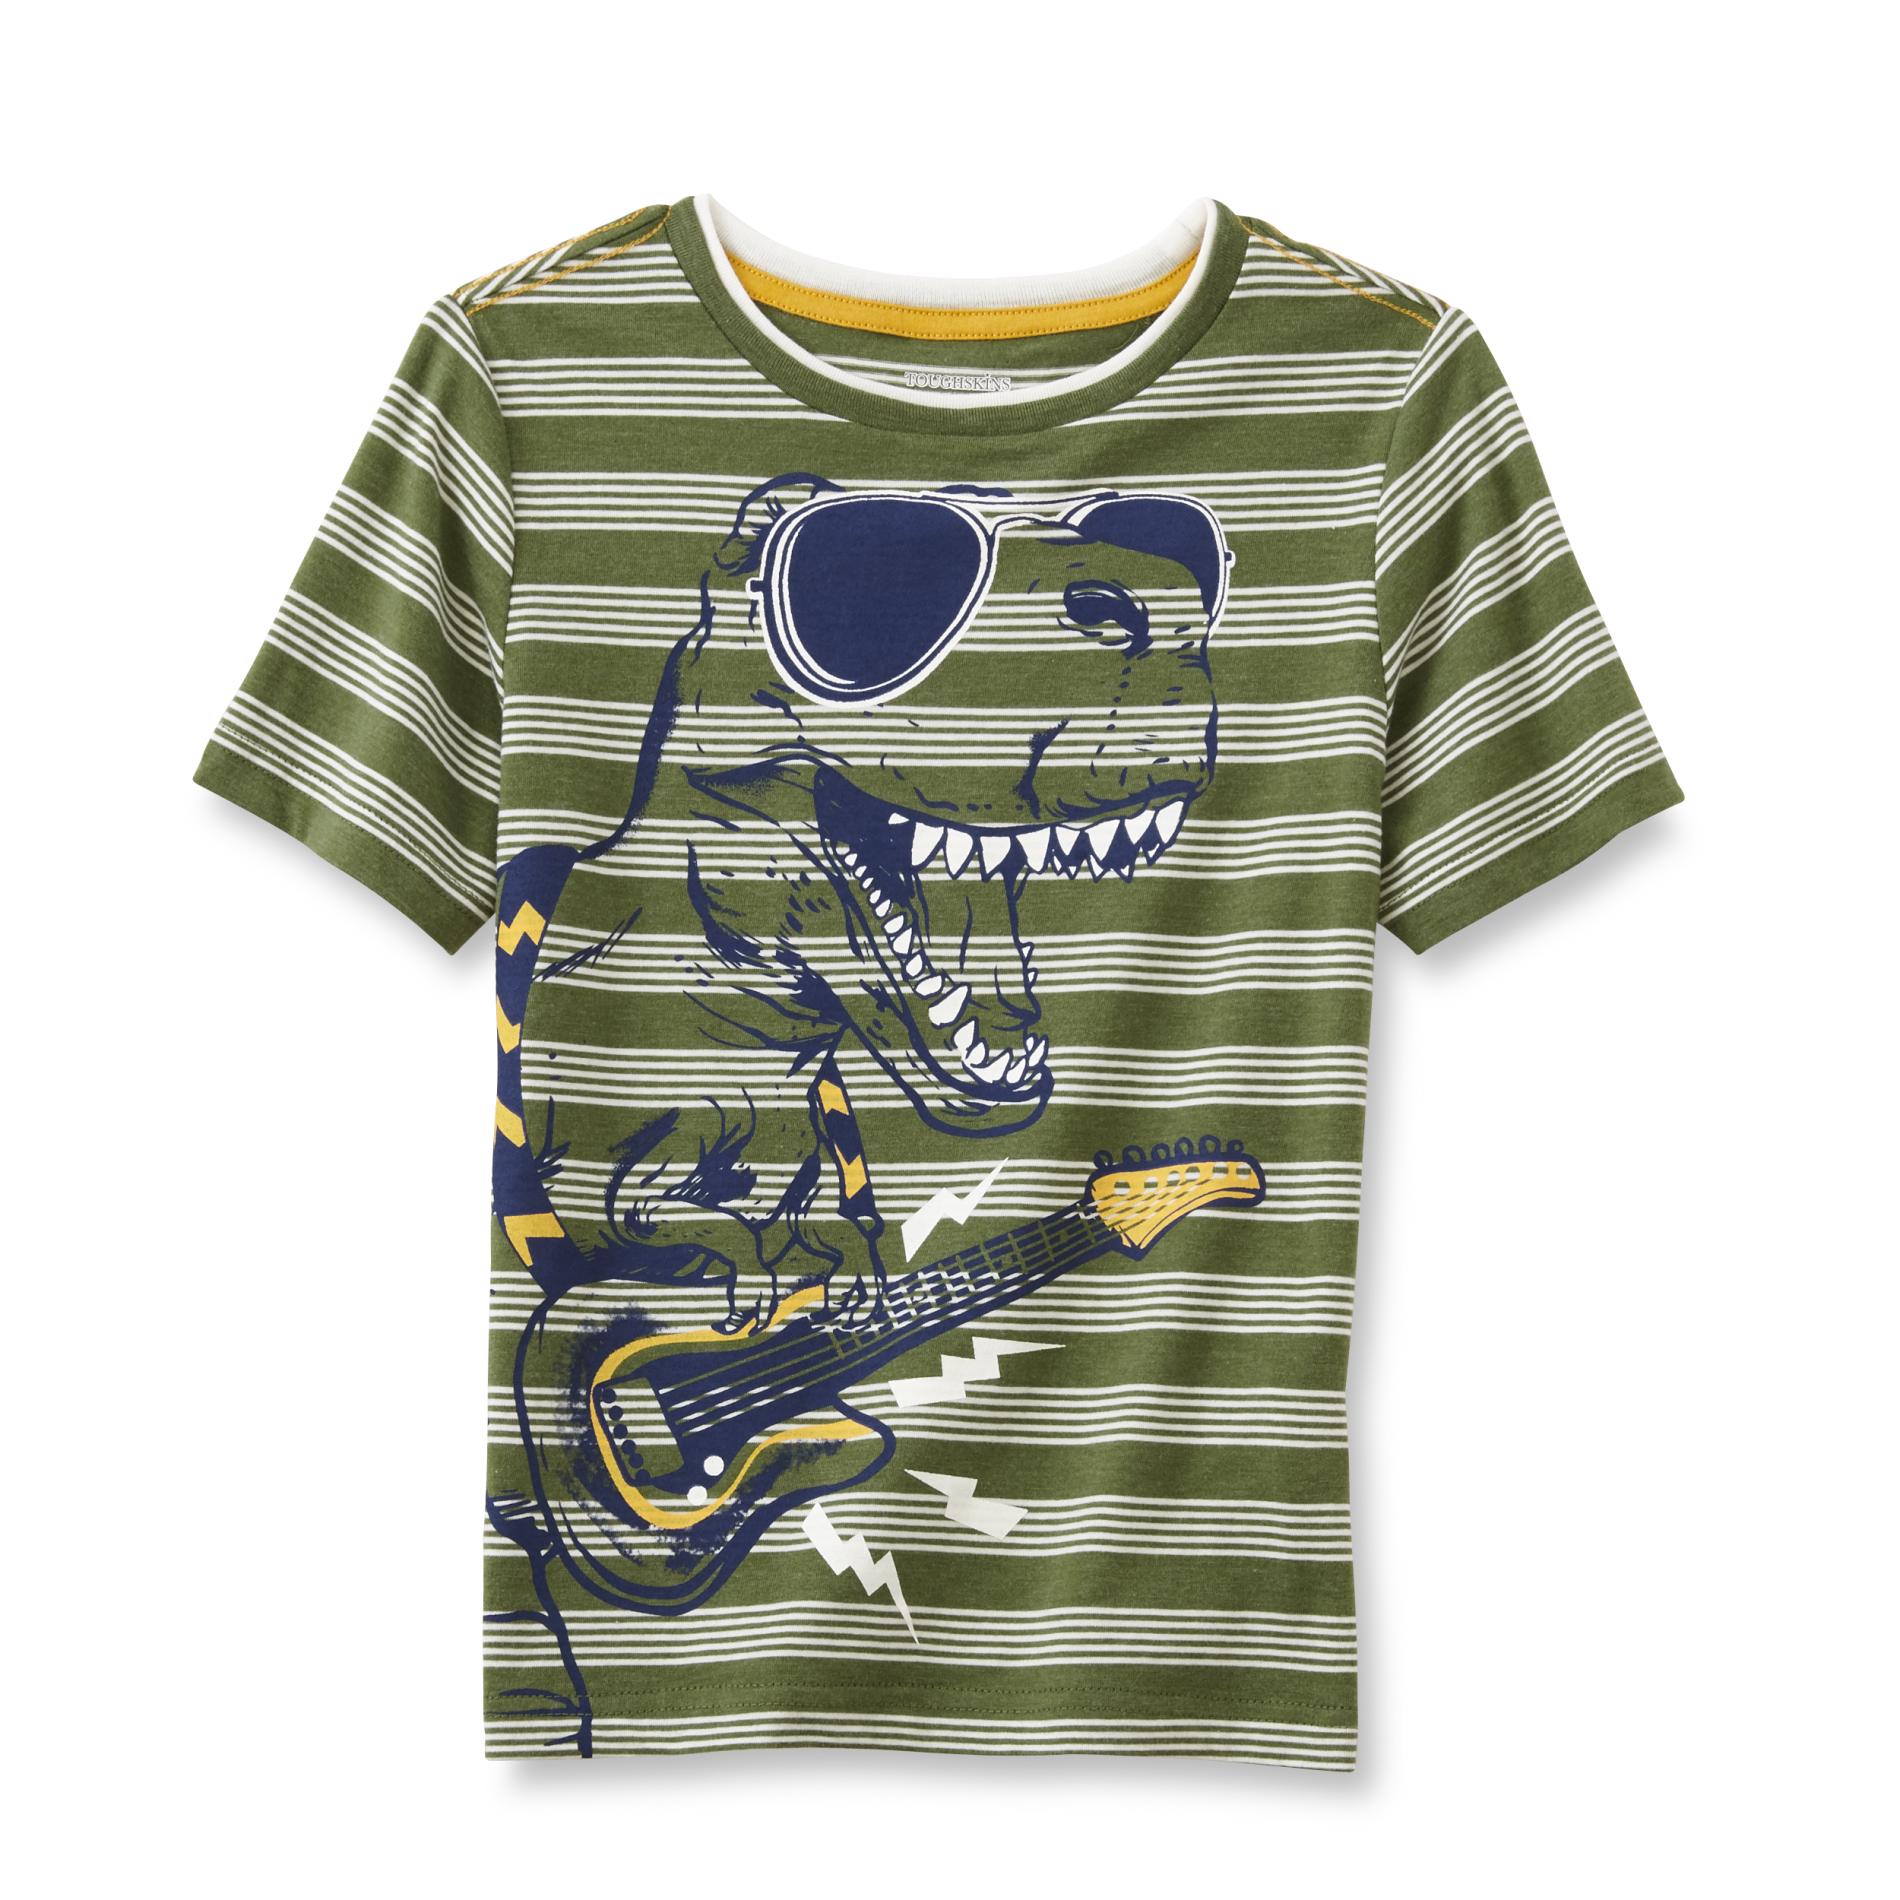 Toughskins Infant & Toddler Boy's Graphic T-Shirt - Dinosaur